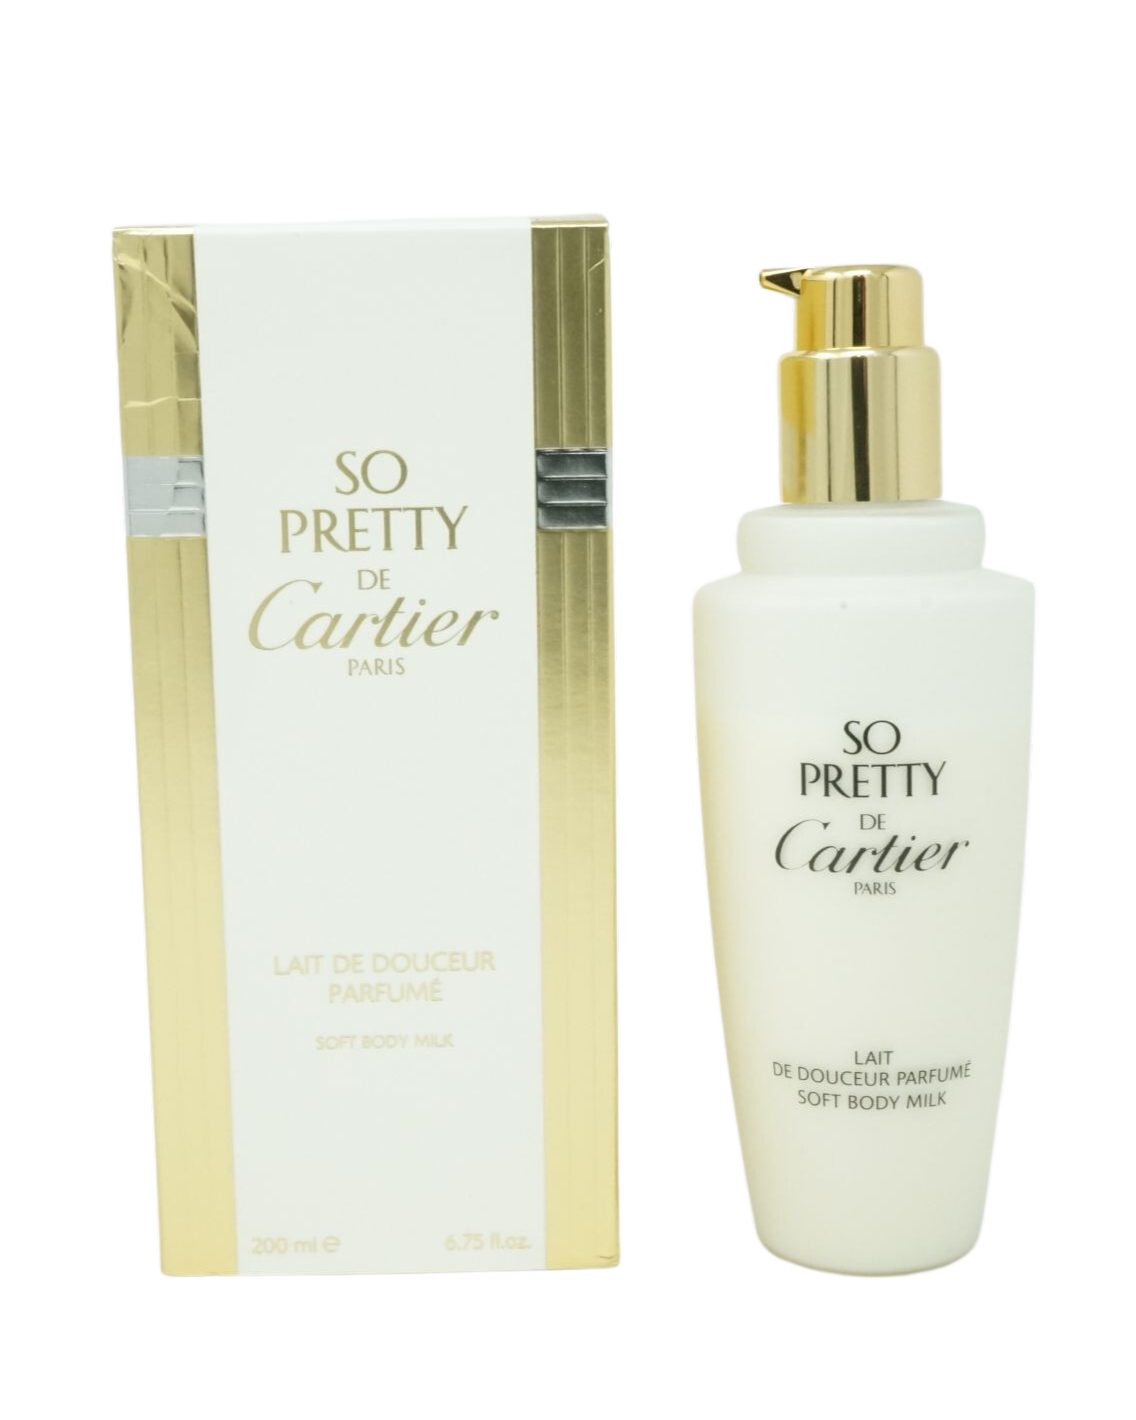 200ml Milk Cartier Körpermilch Soft Cartier So Pretty Body